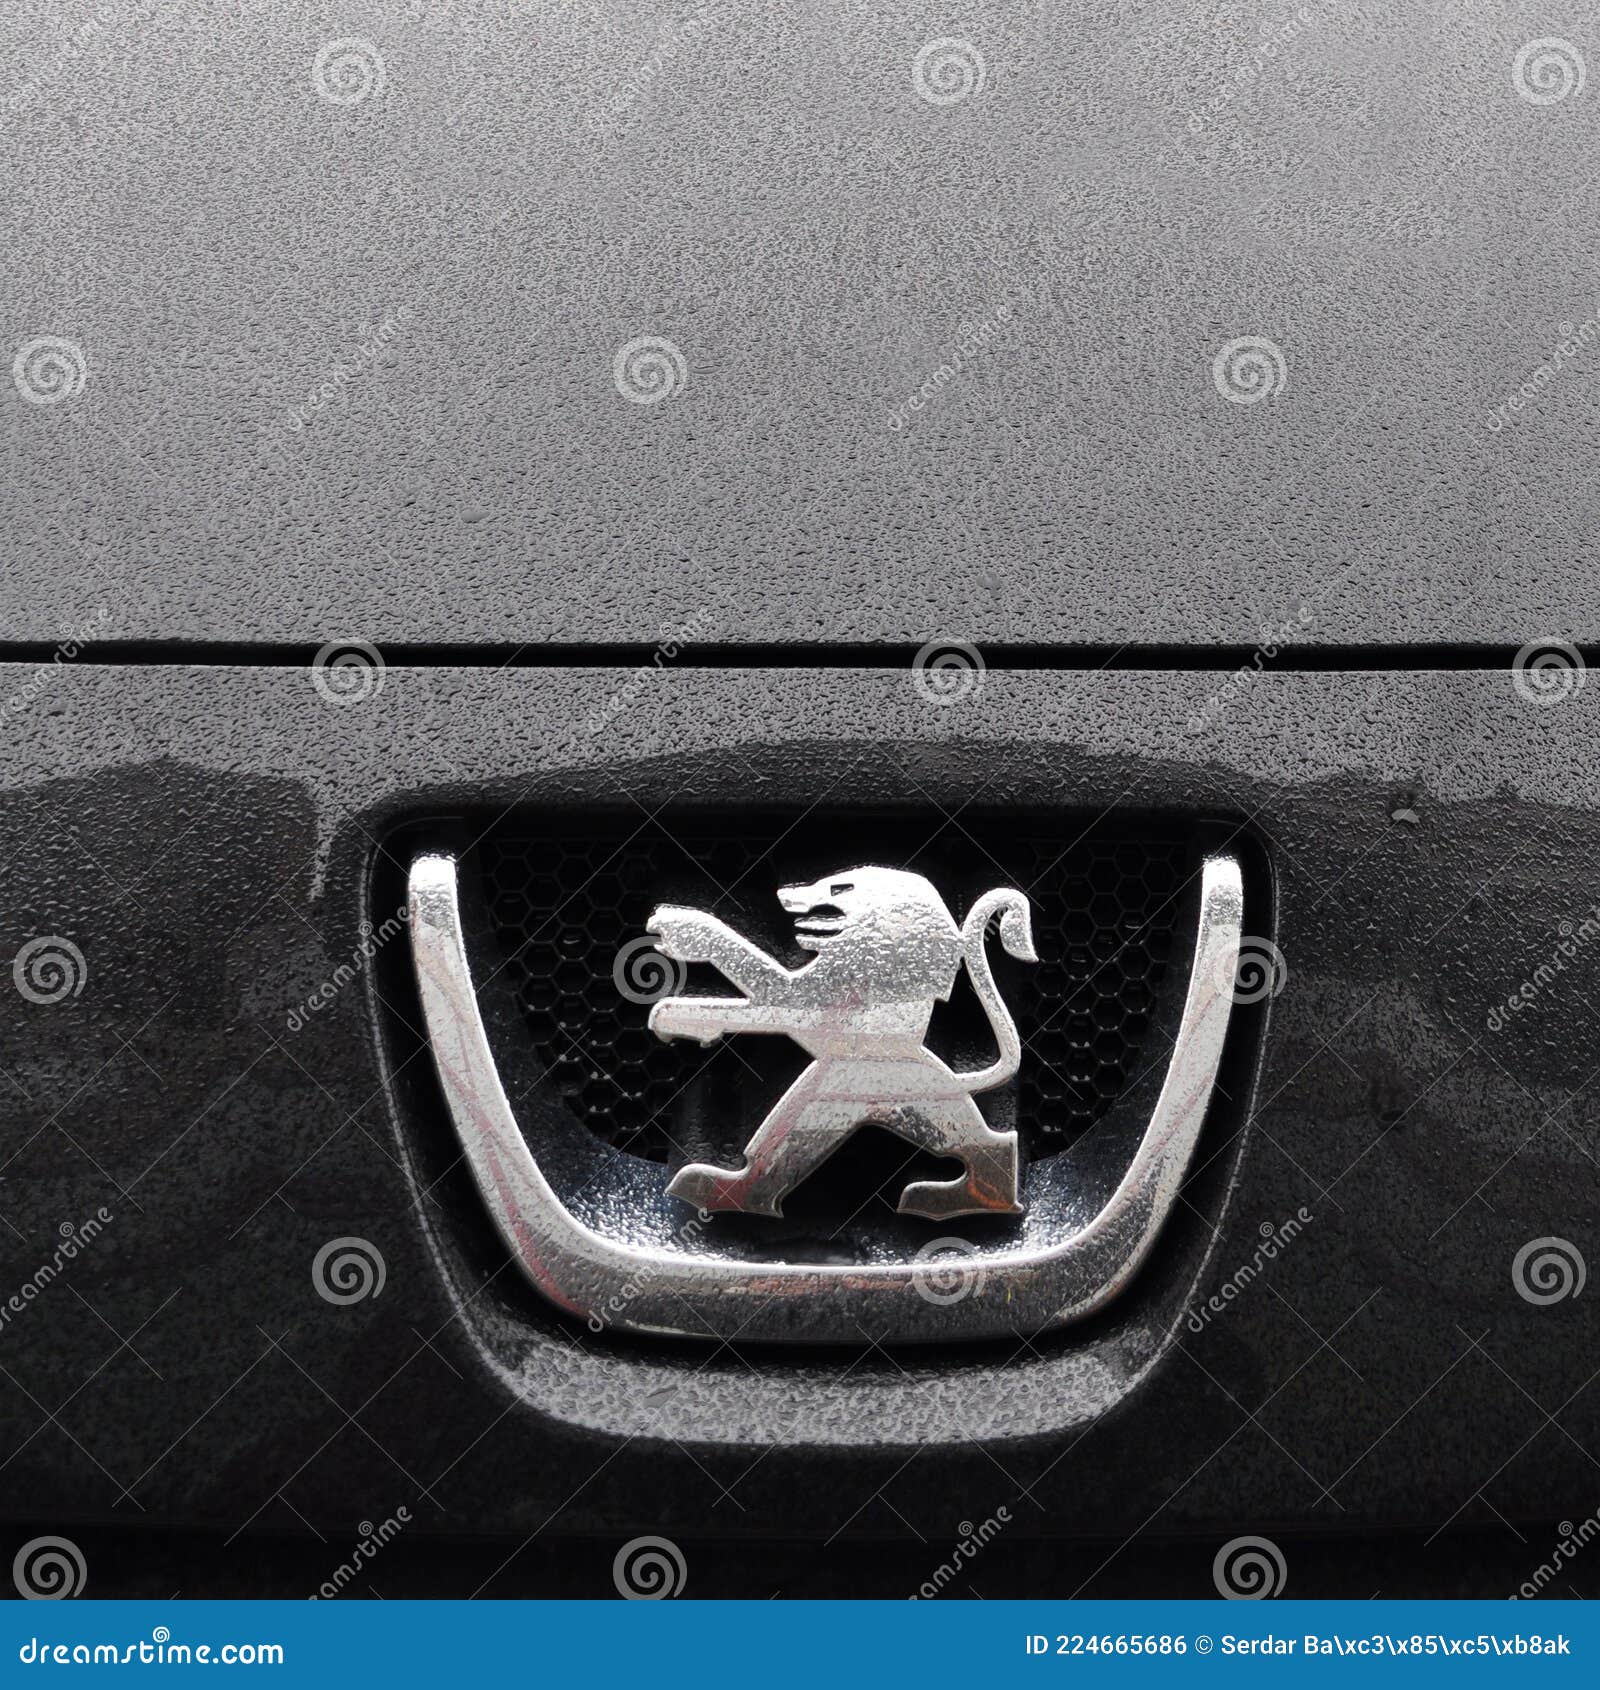 Peugeot Logo, Luxury Car in Istanbul City, December 29 2010